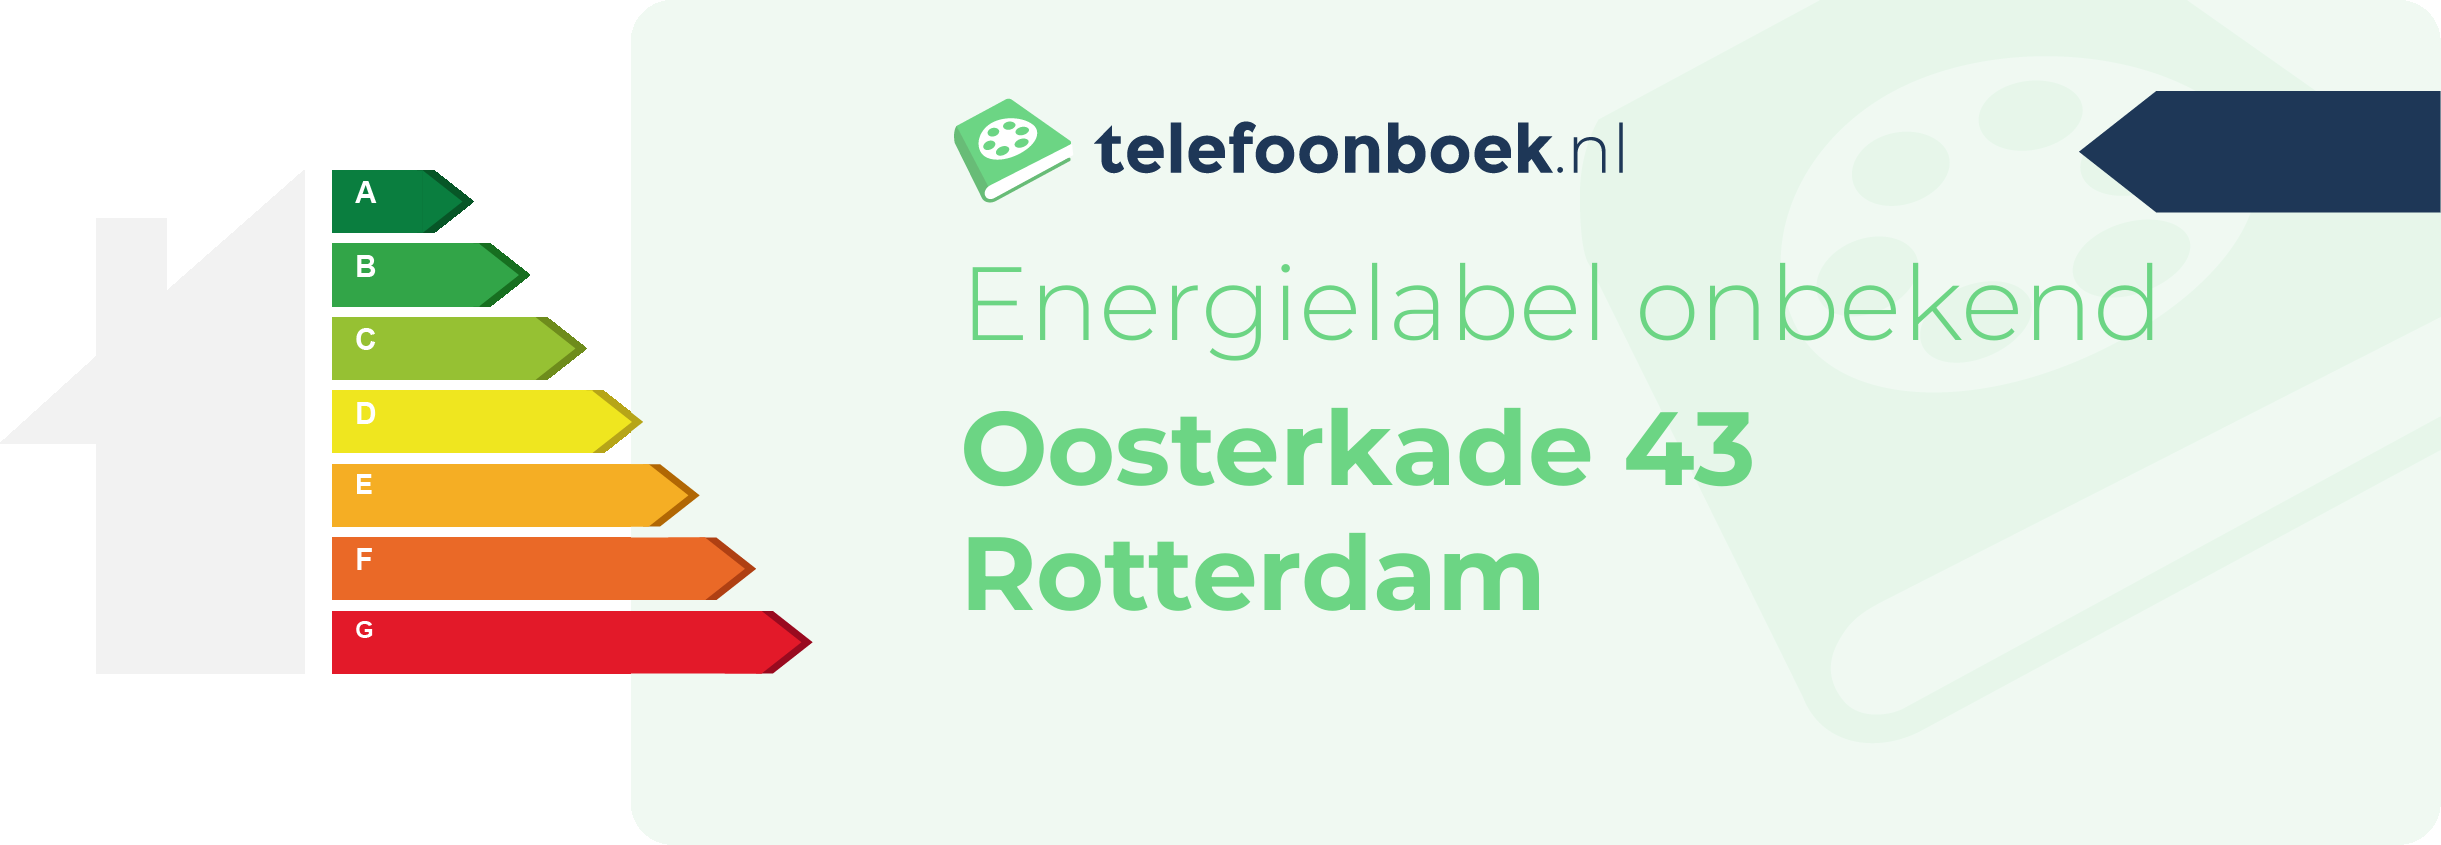 Energielabel Oosterkade 43 Rotterdam